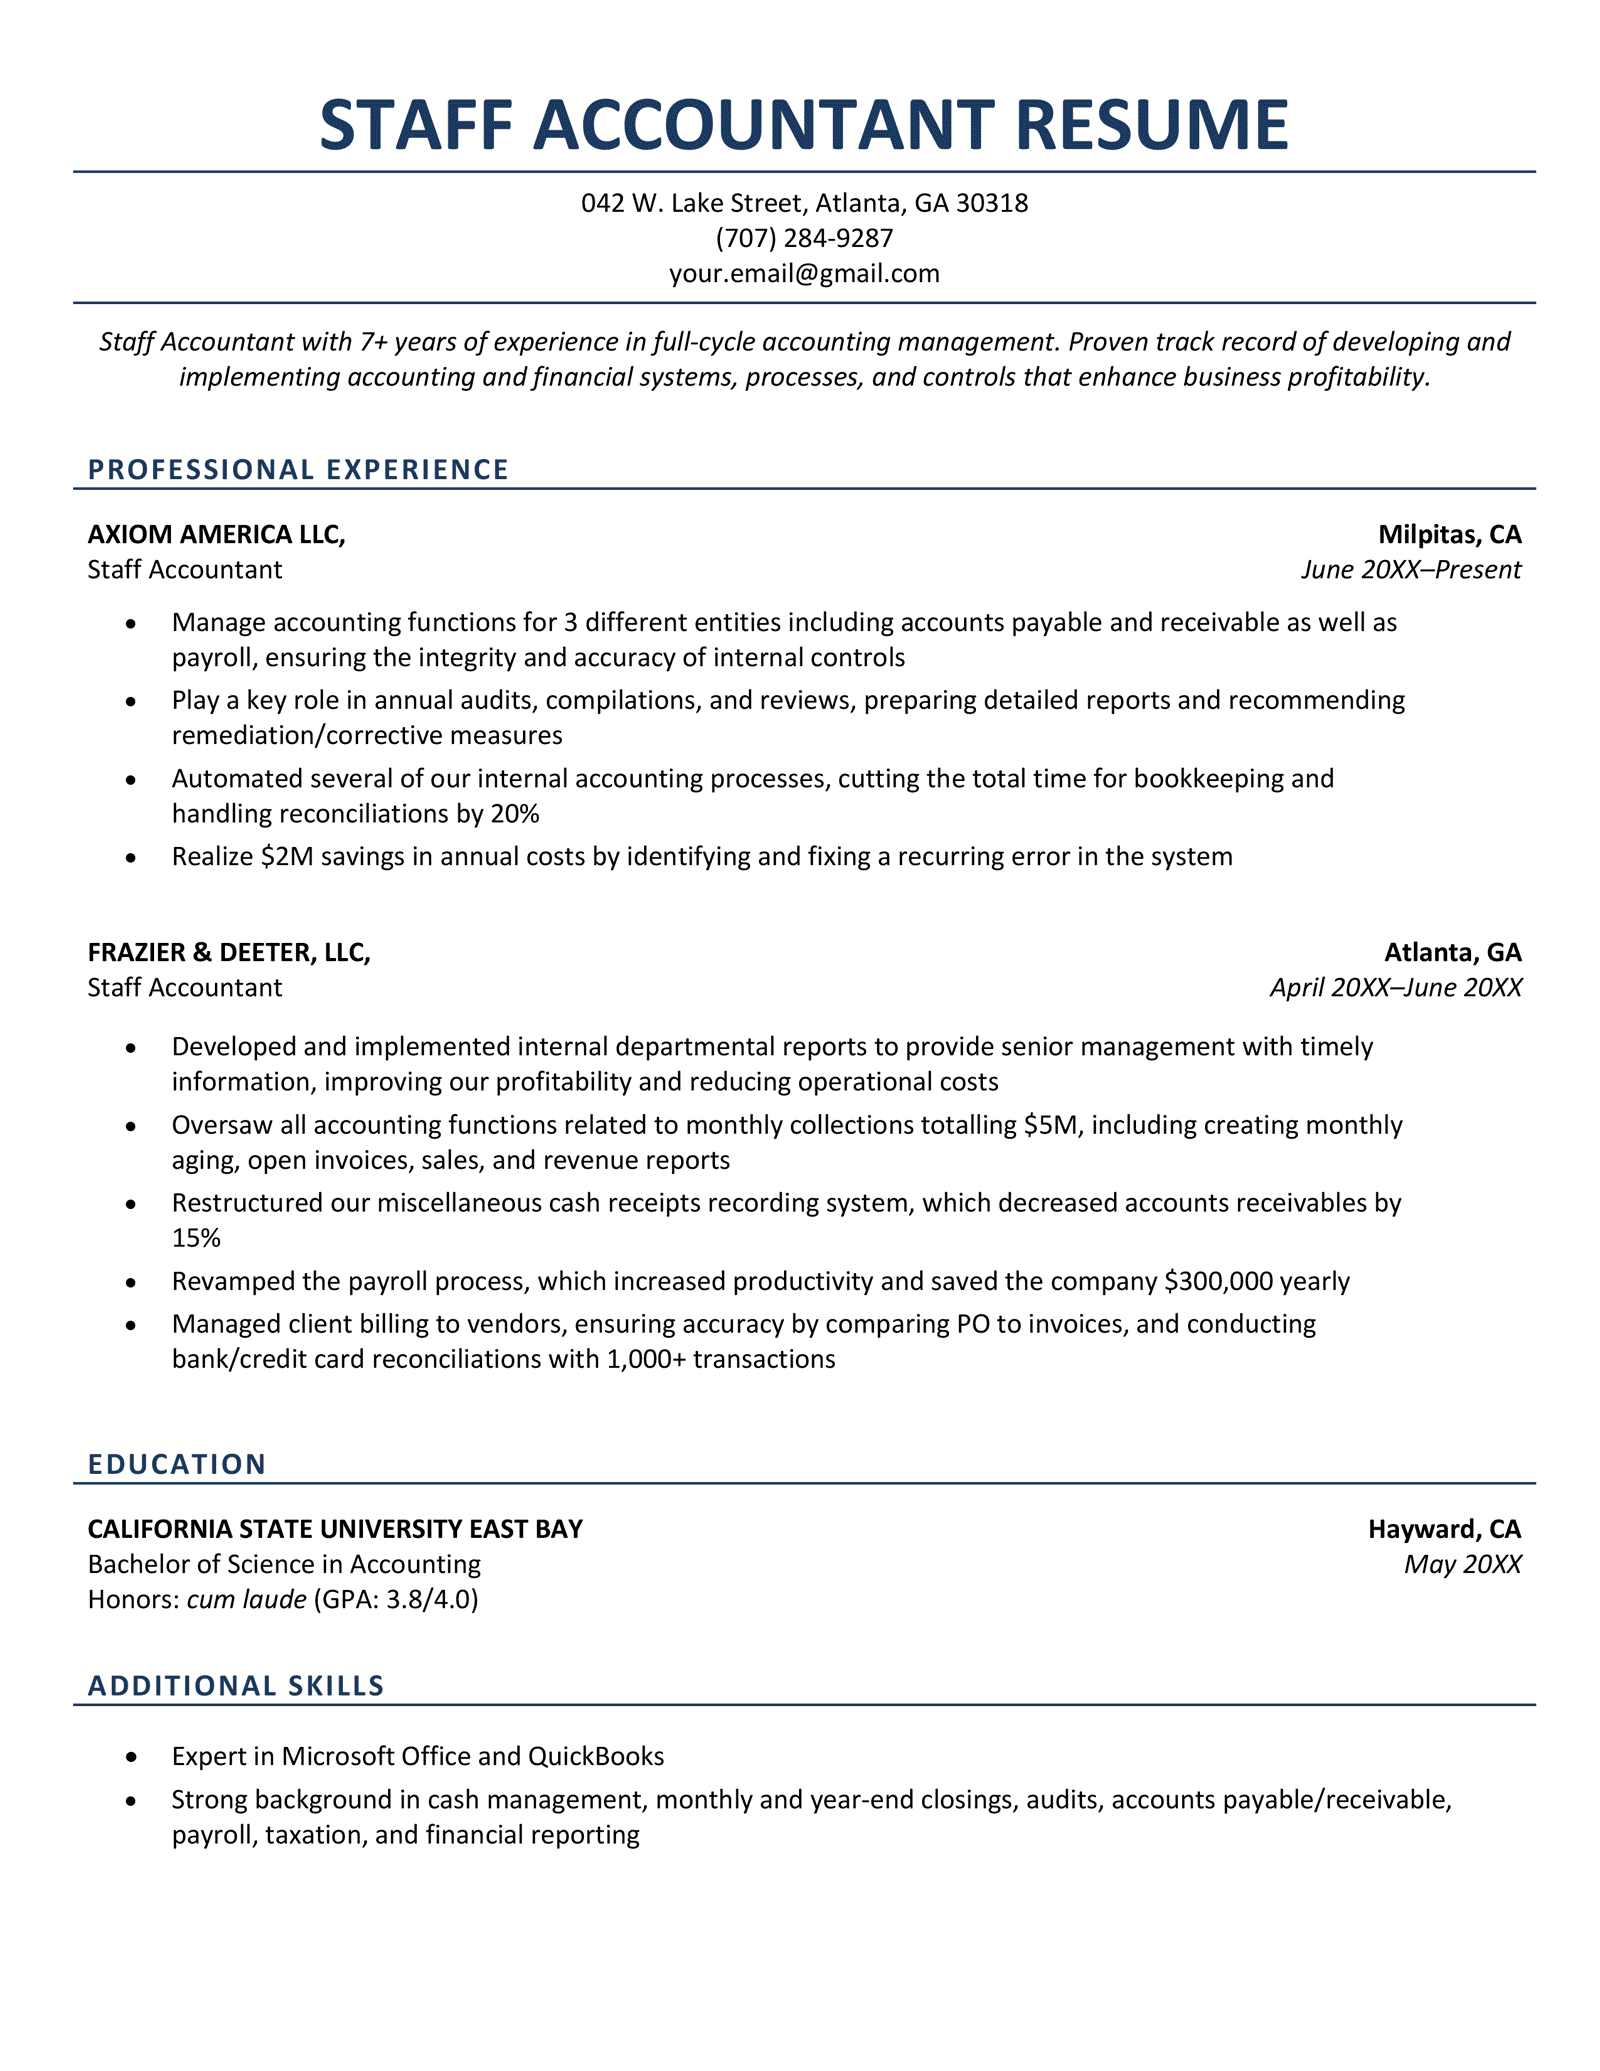 staff-accountant-resume-example-e1636700475956